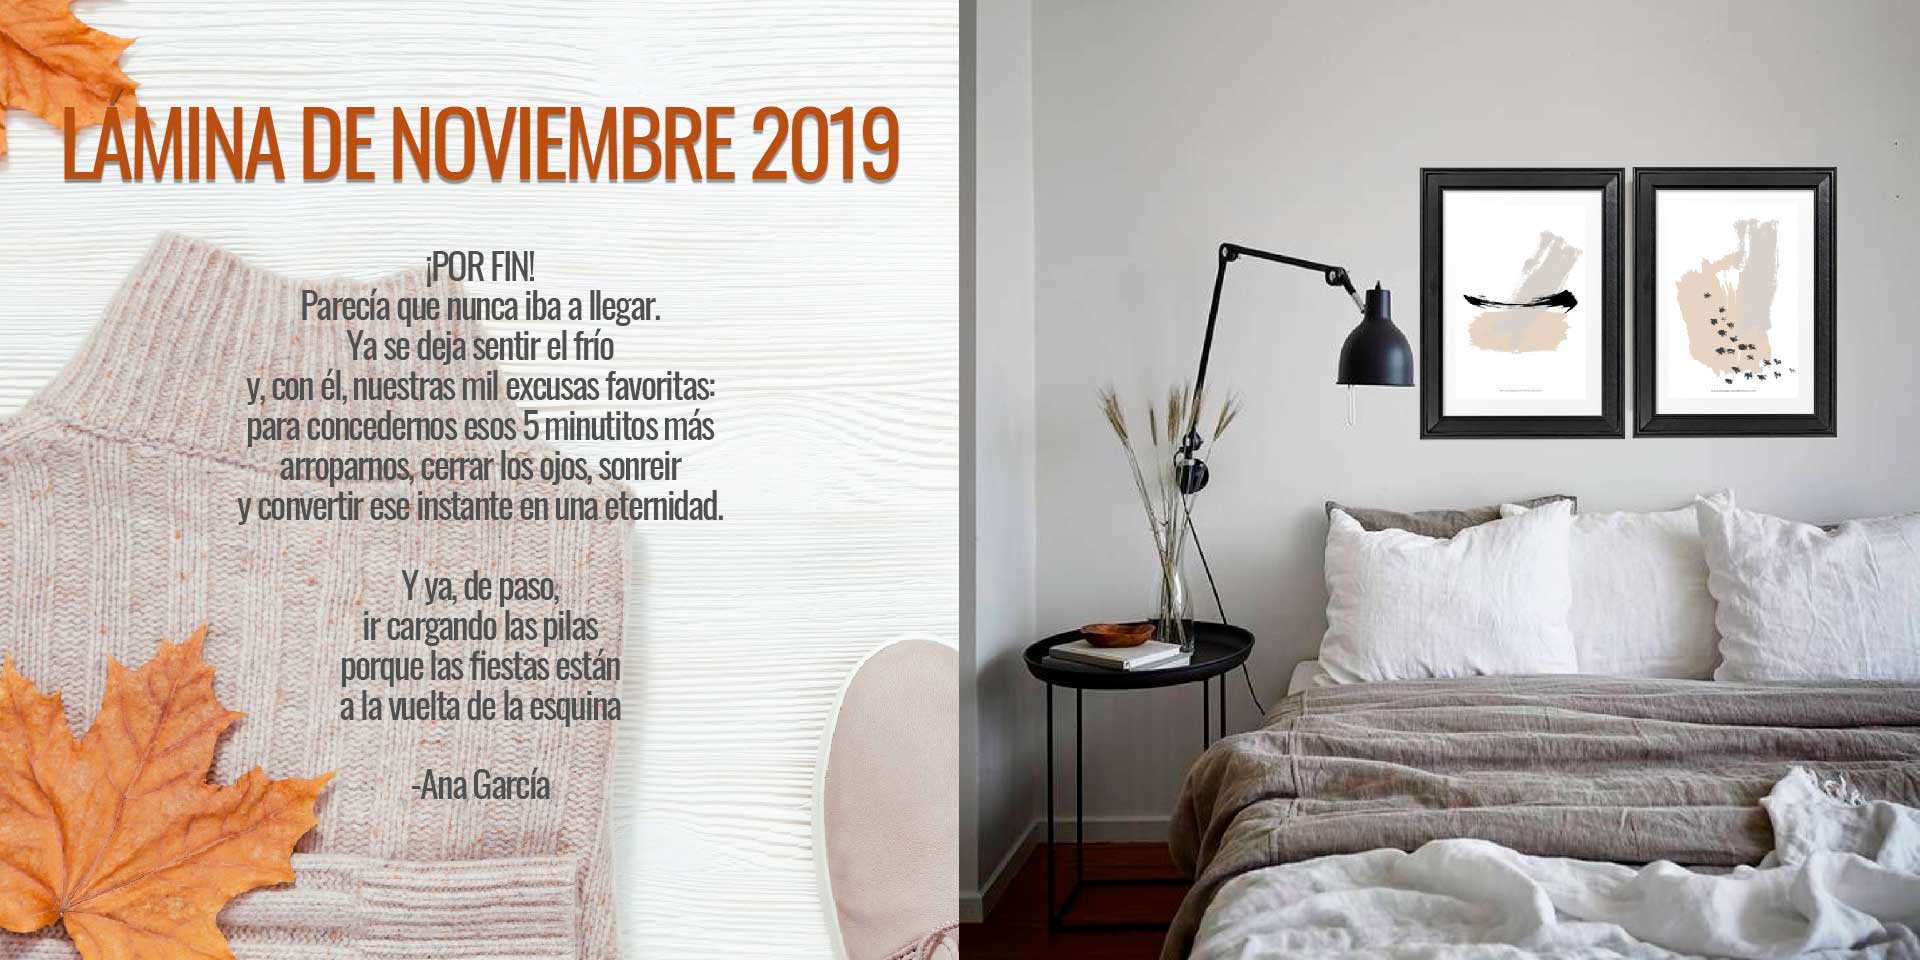 Lámina Decorativa Gratis Octubre 2019 Ana Garcia Interiorista